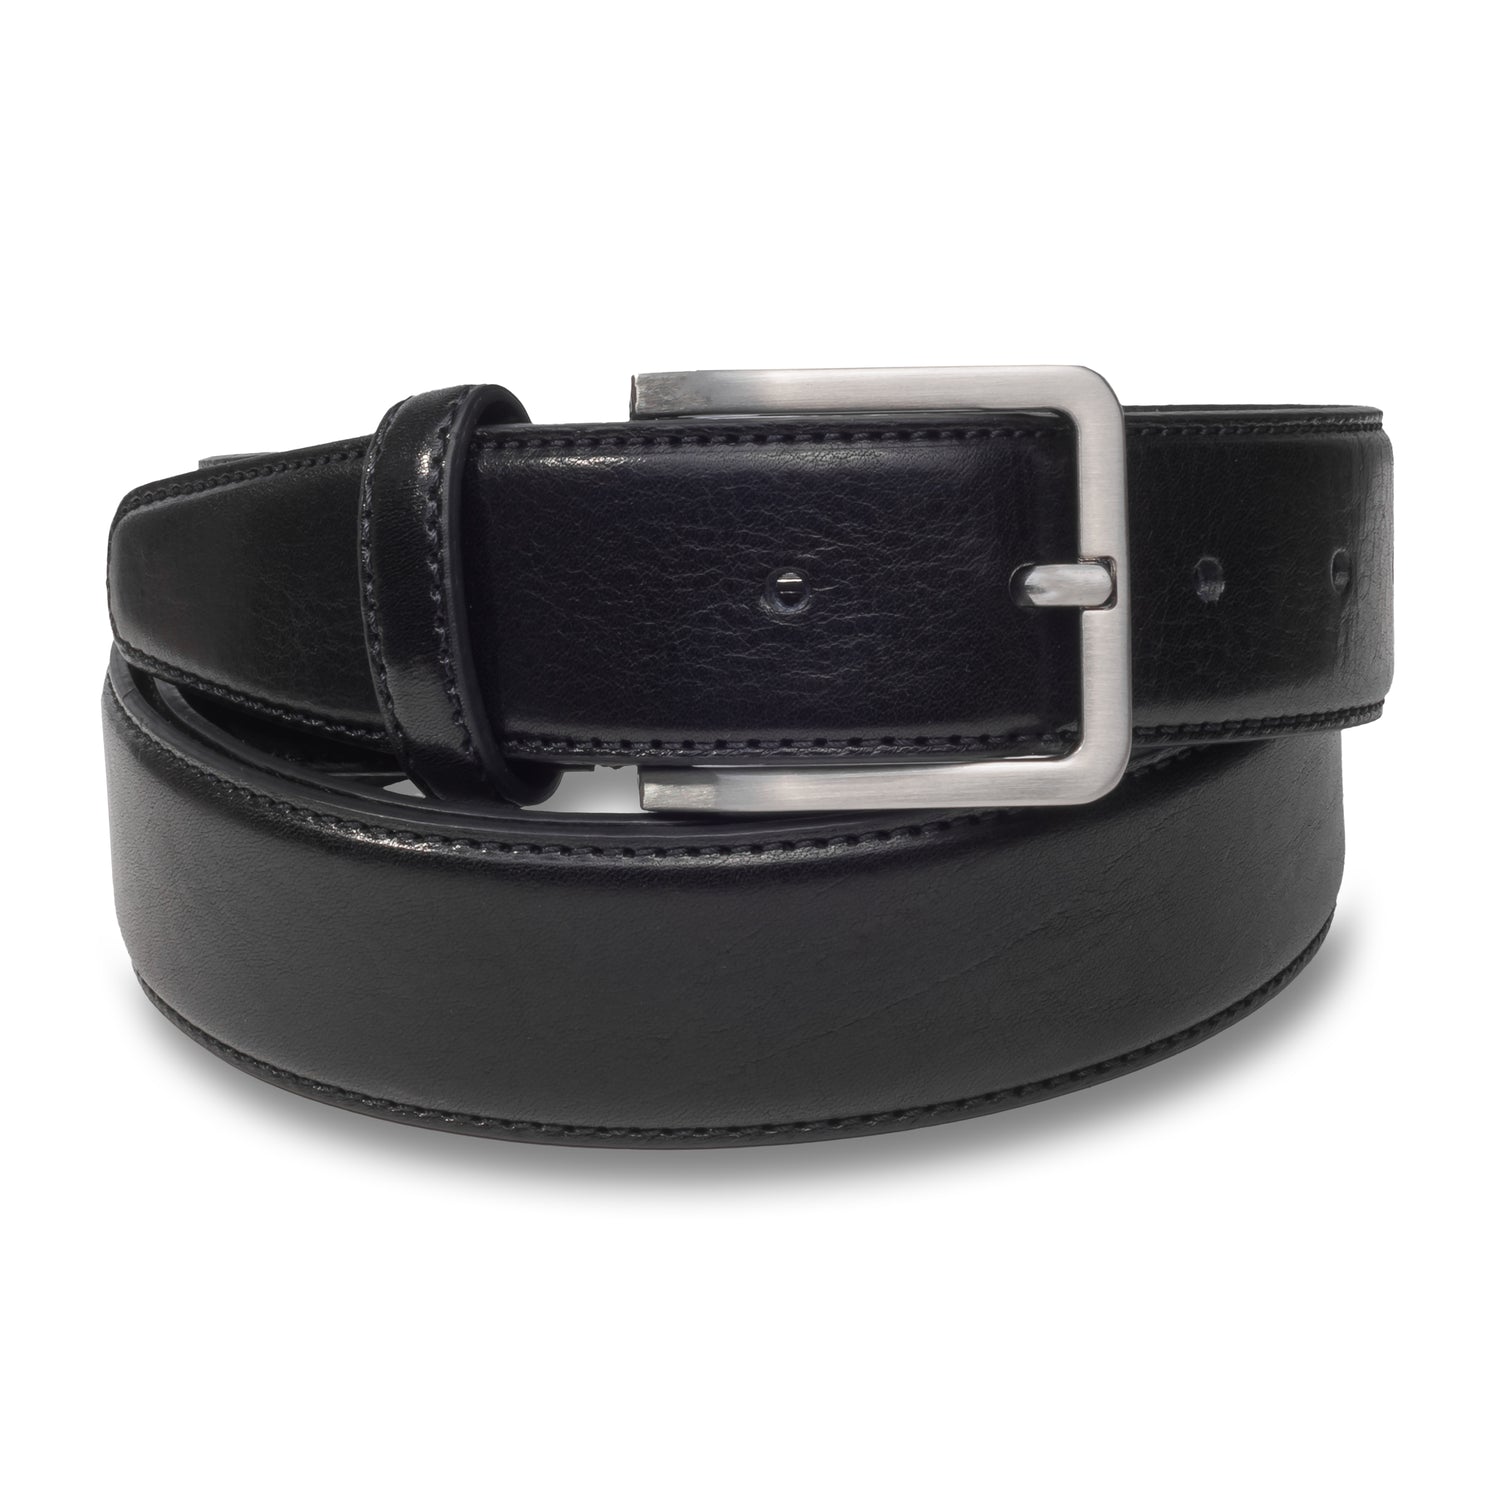 scarpe schwarz SISENTO Italienische Herrenschuhe & cm - – co Ledergürtel breit 3,5